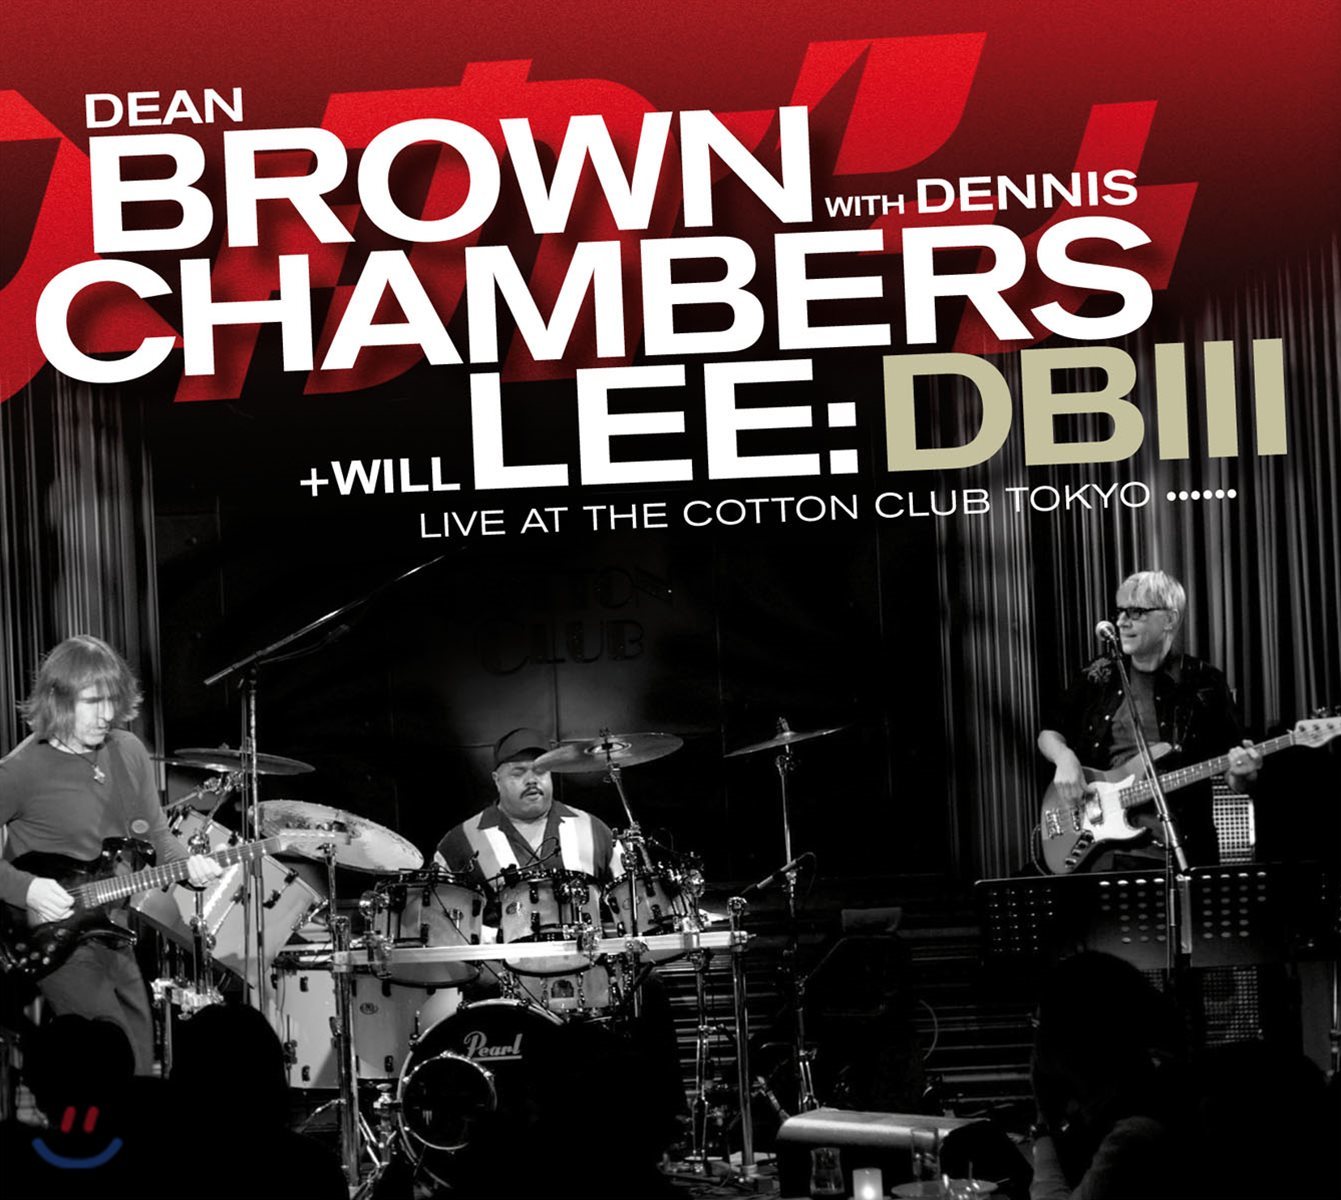 Dean Brown &amp; Dennis Chambers (딘 브라운 앤 데니스 채임버스) - DB III